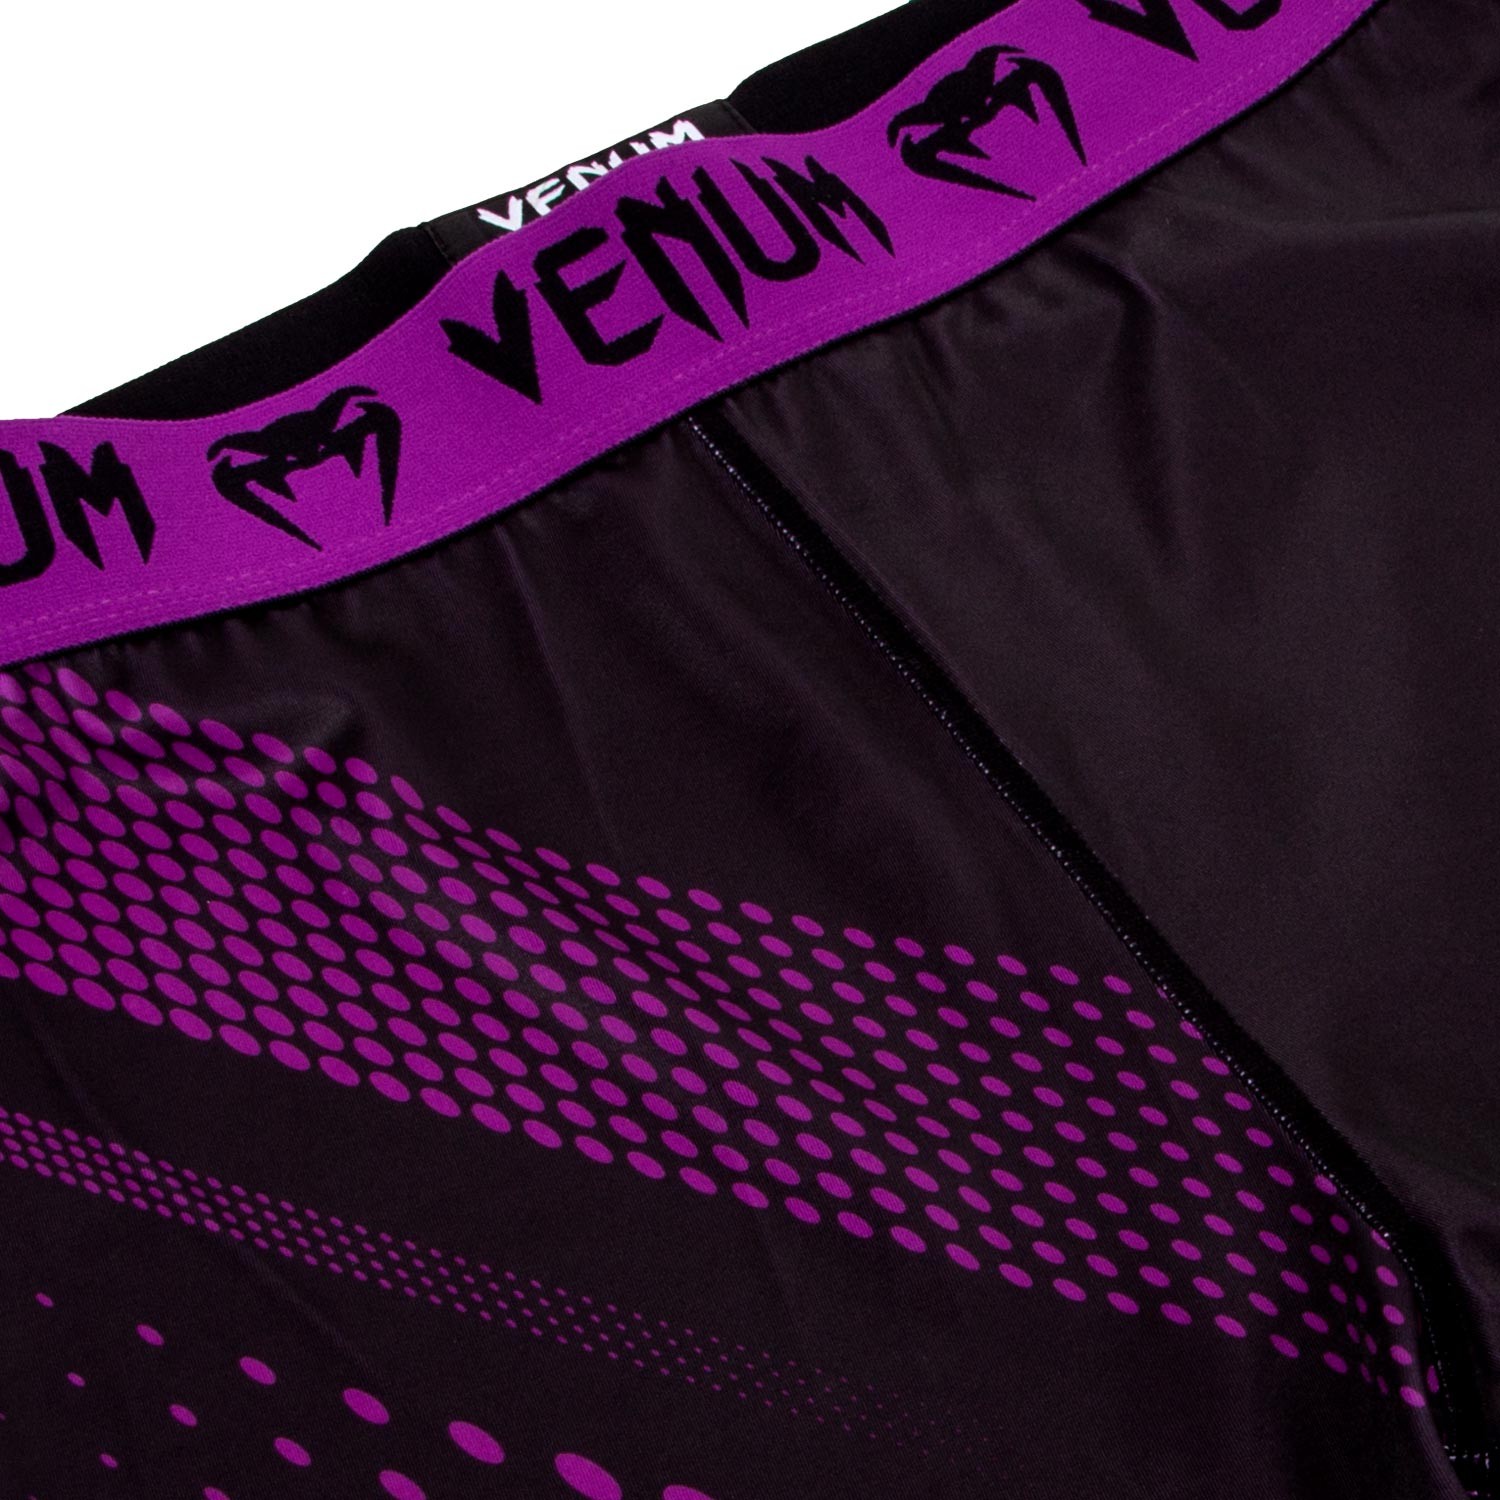 Компрессионные штаны Venum Rapid Black/Purple